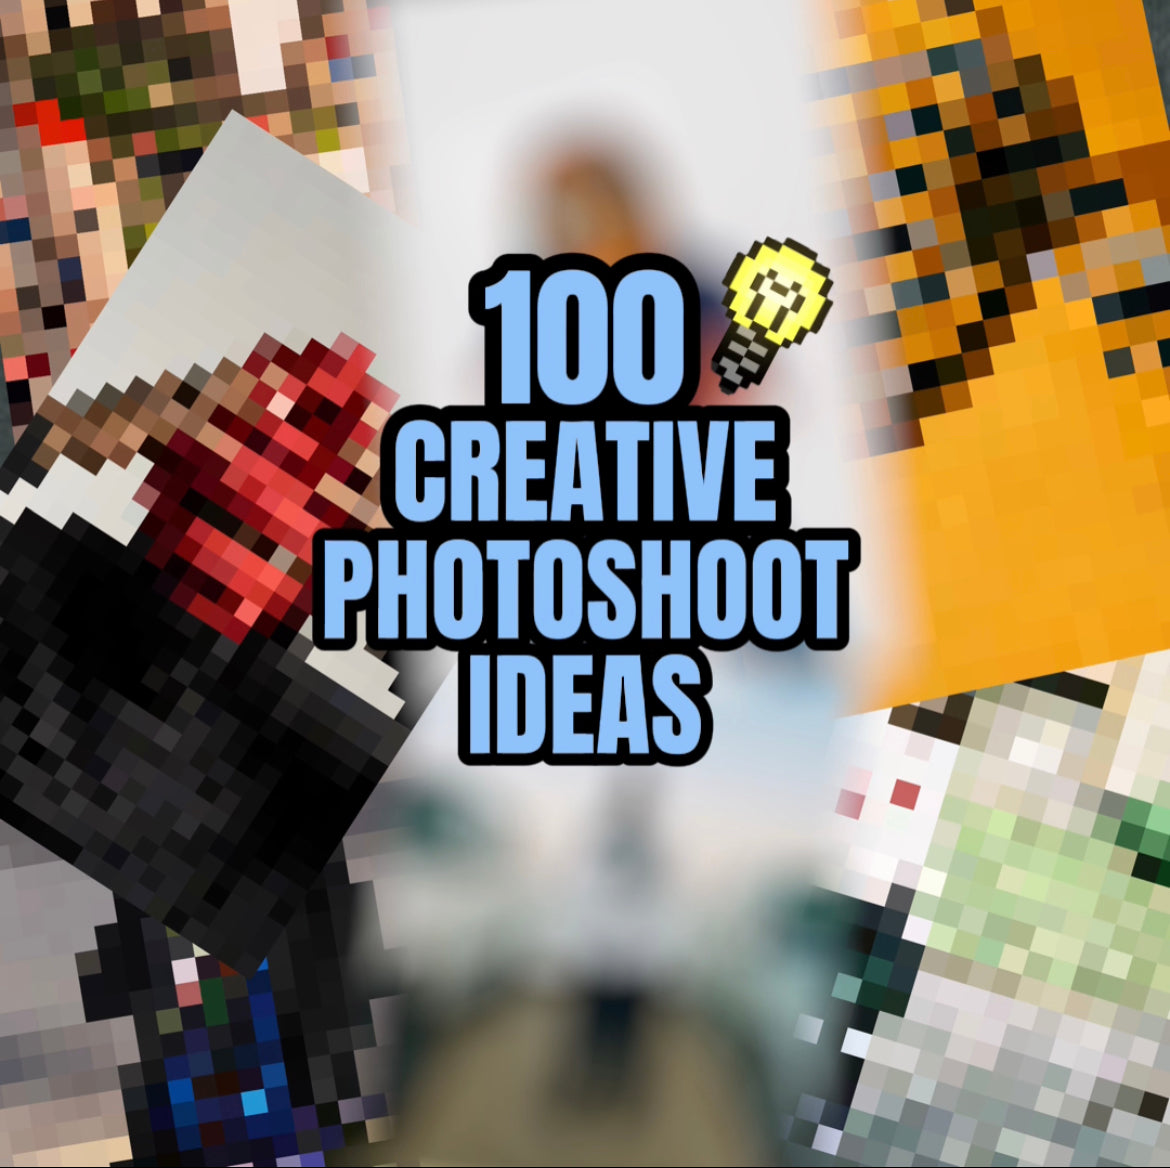 100 CREATIVE PHOTOSHOOT IDEAS